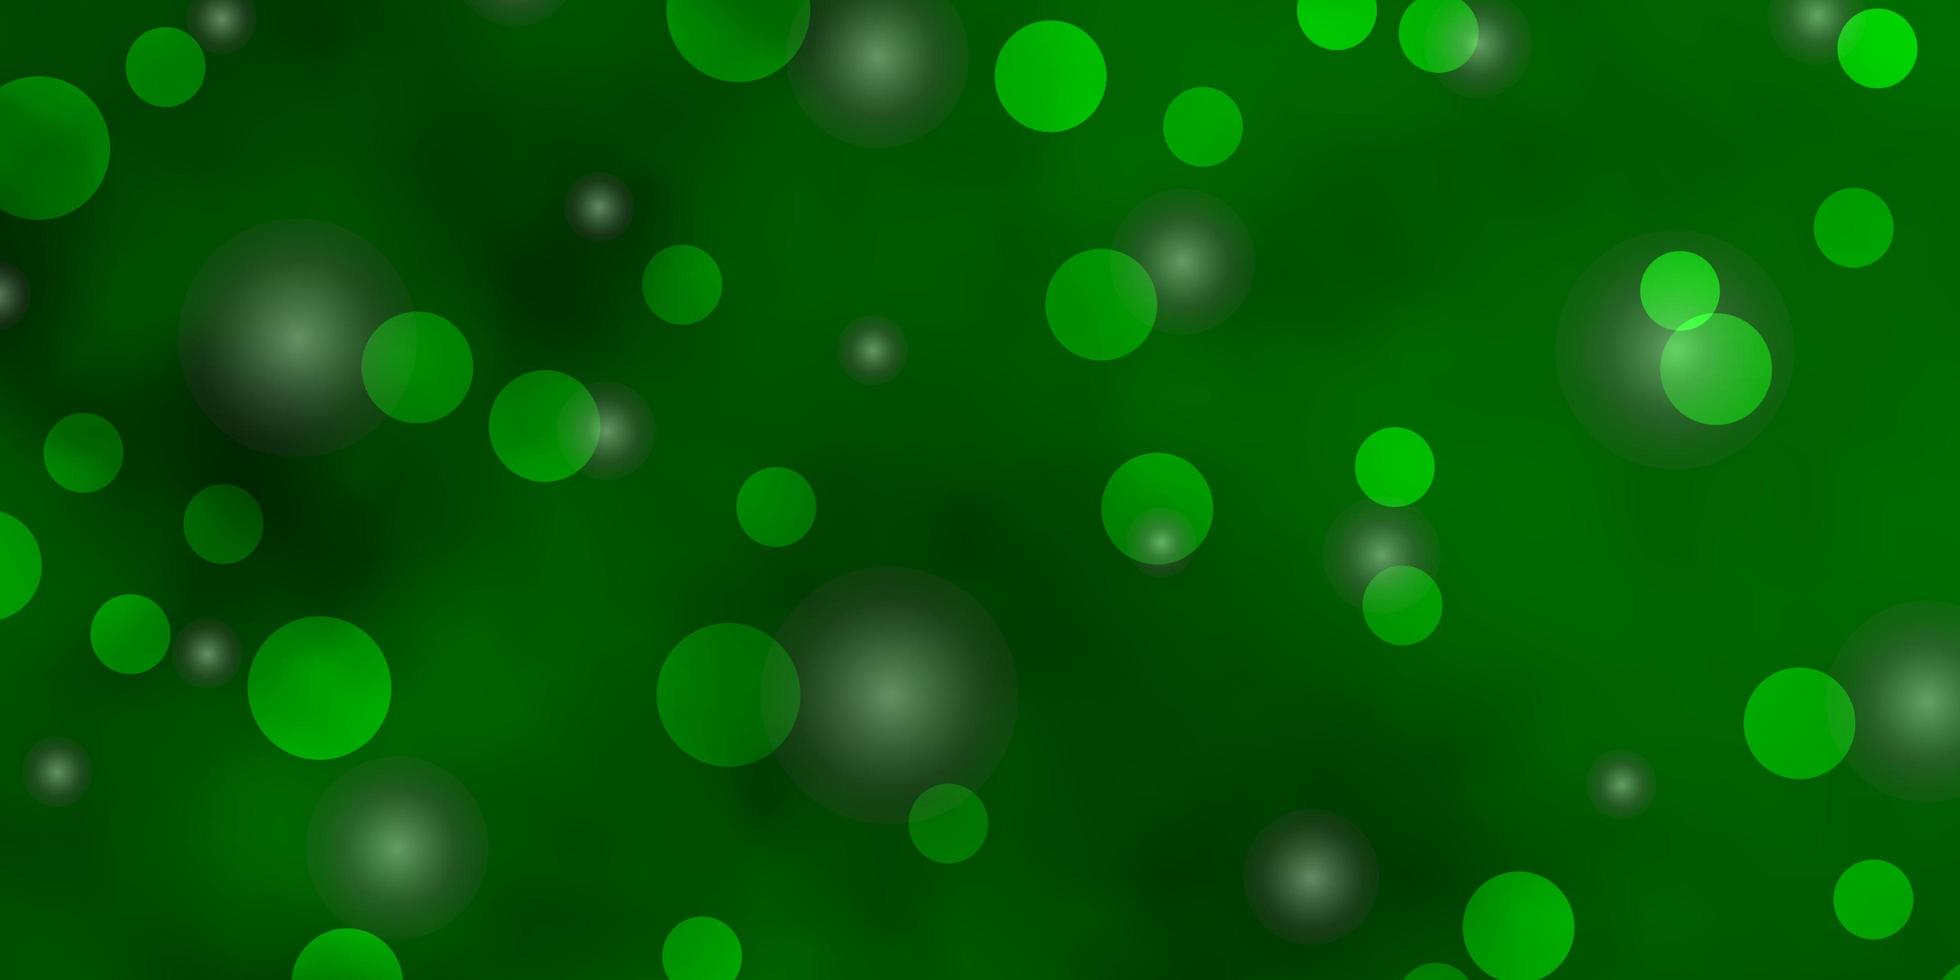 textura de vetor verde claro com círculos, estrelas. discos coloridos, estrelas em fundo gradiente simples. design para cartazes, banners.